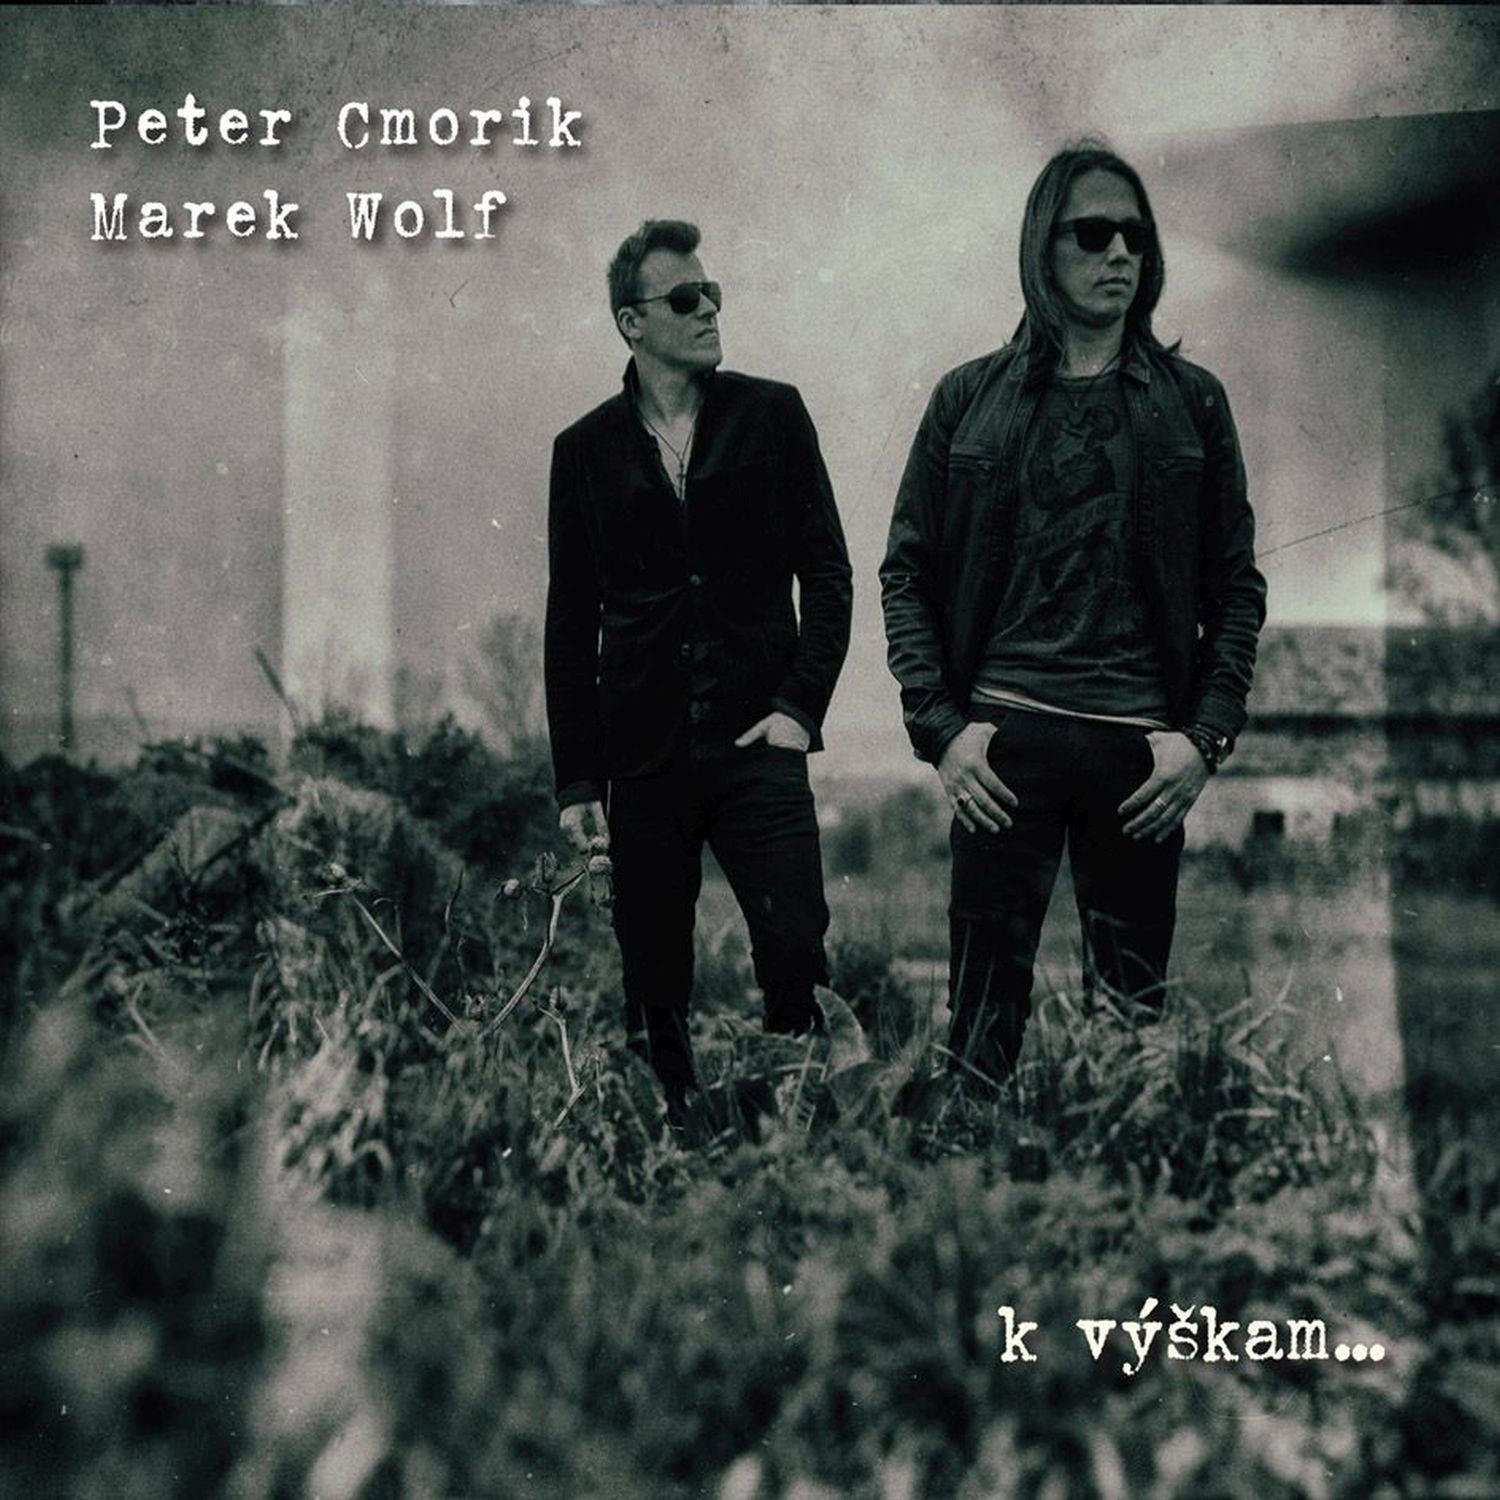 CD Shop - CMORIK PETER & WOLF MAREK K VYSKAM...